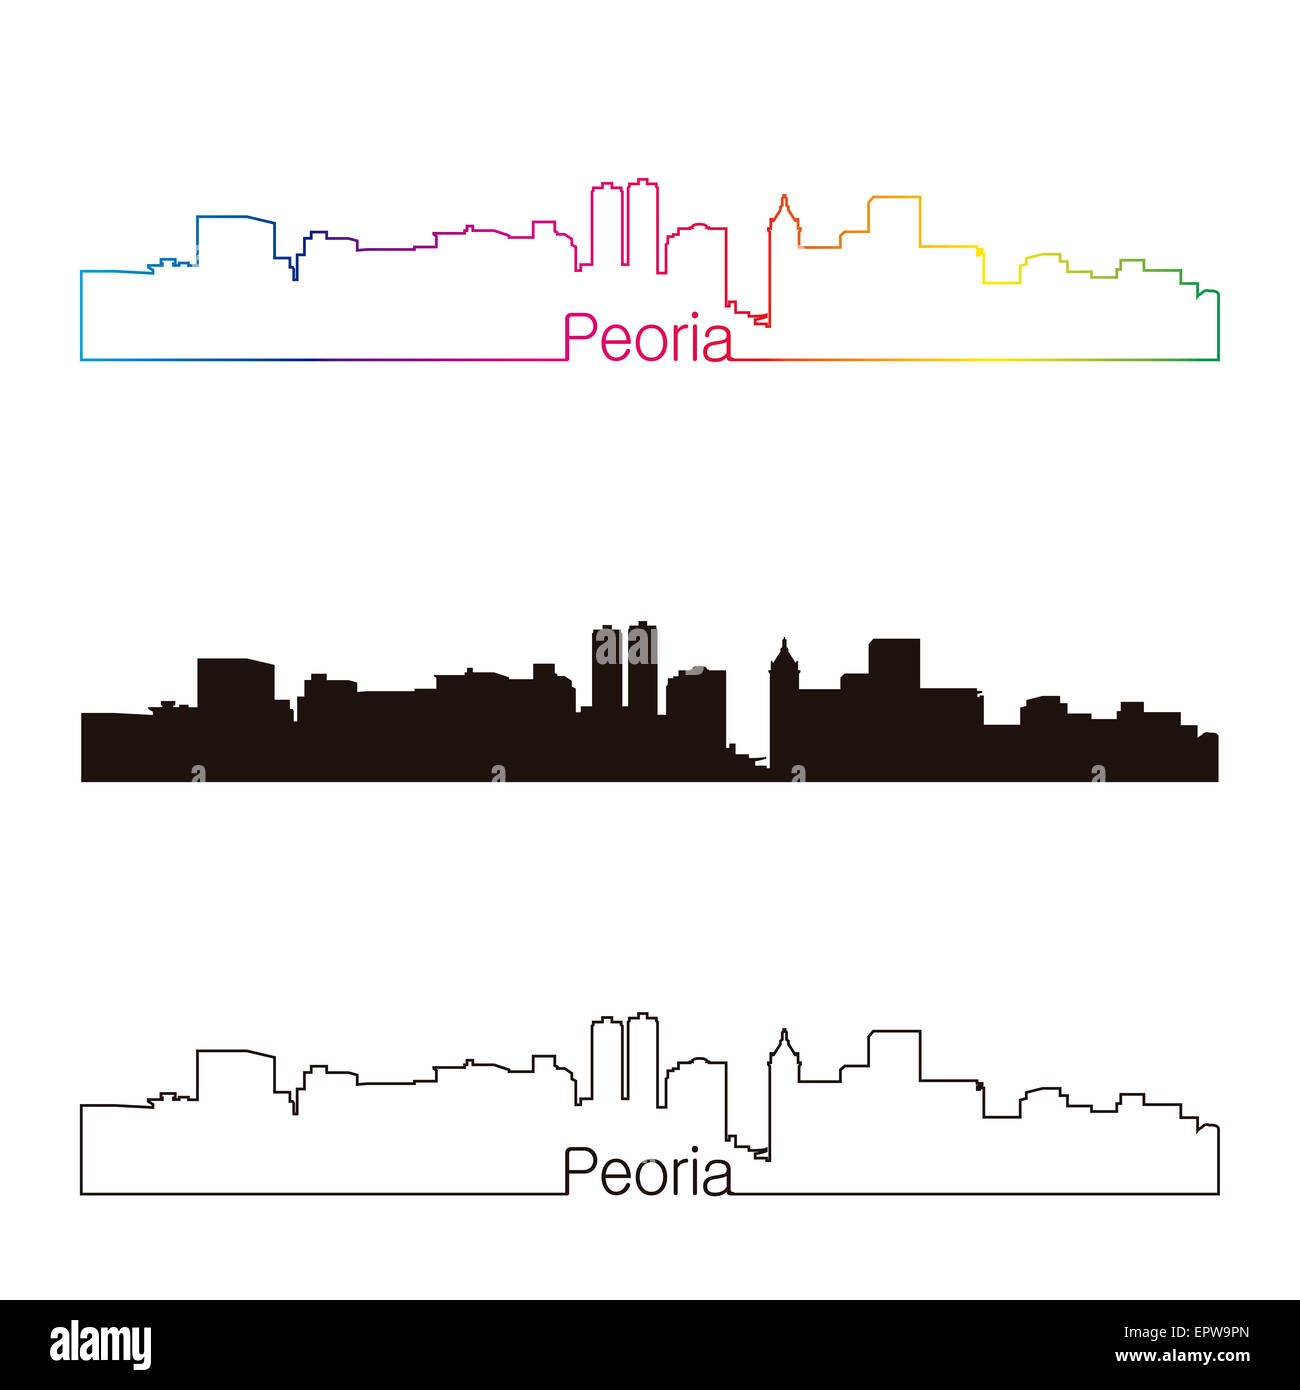 Peoria skyline estilo linear con arco iris Foto de stock